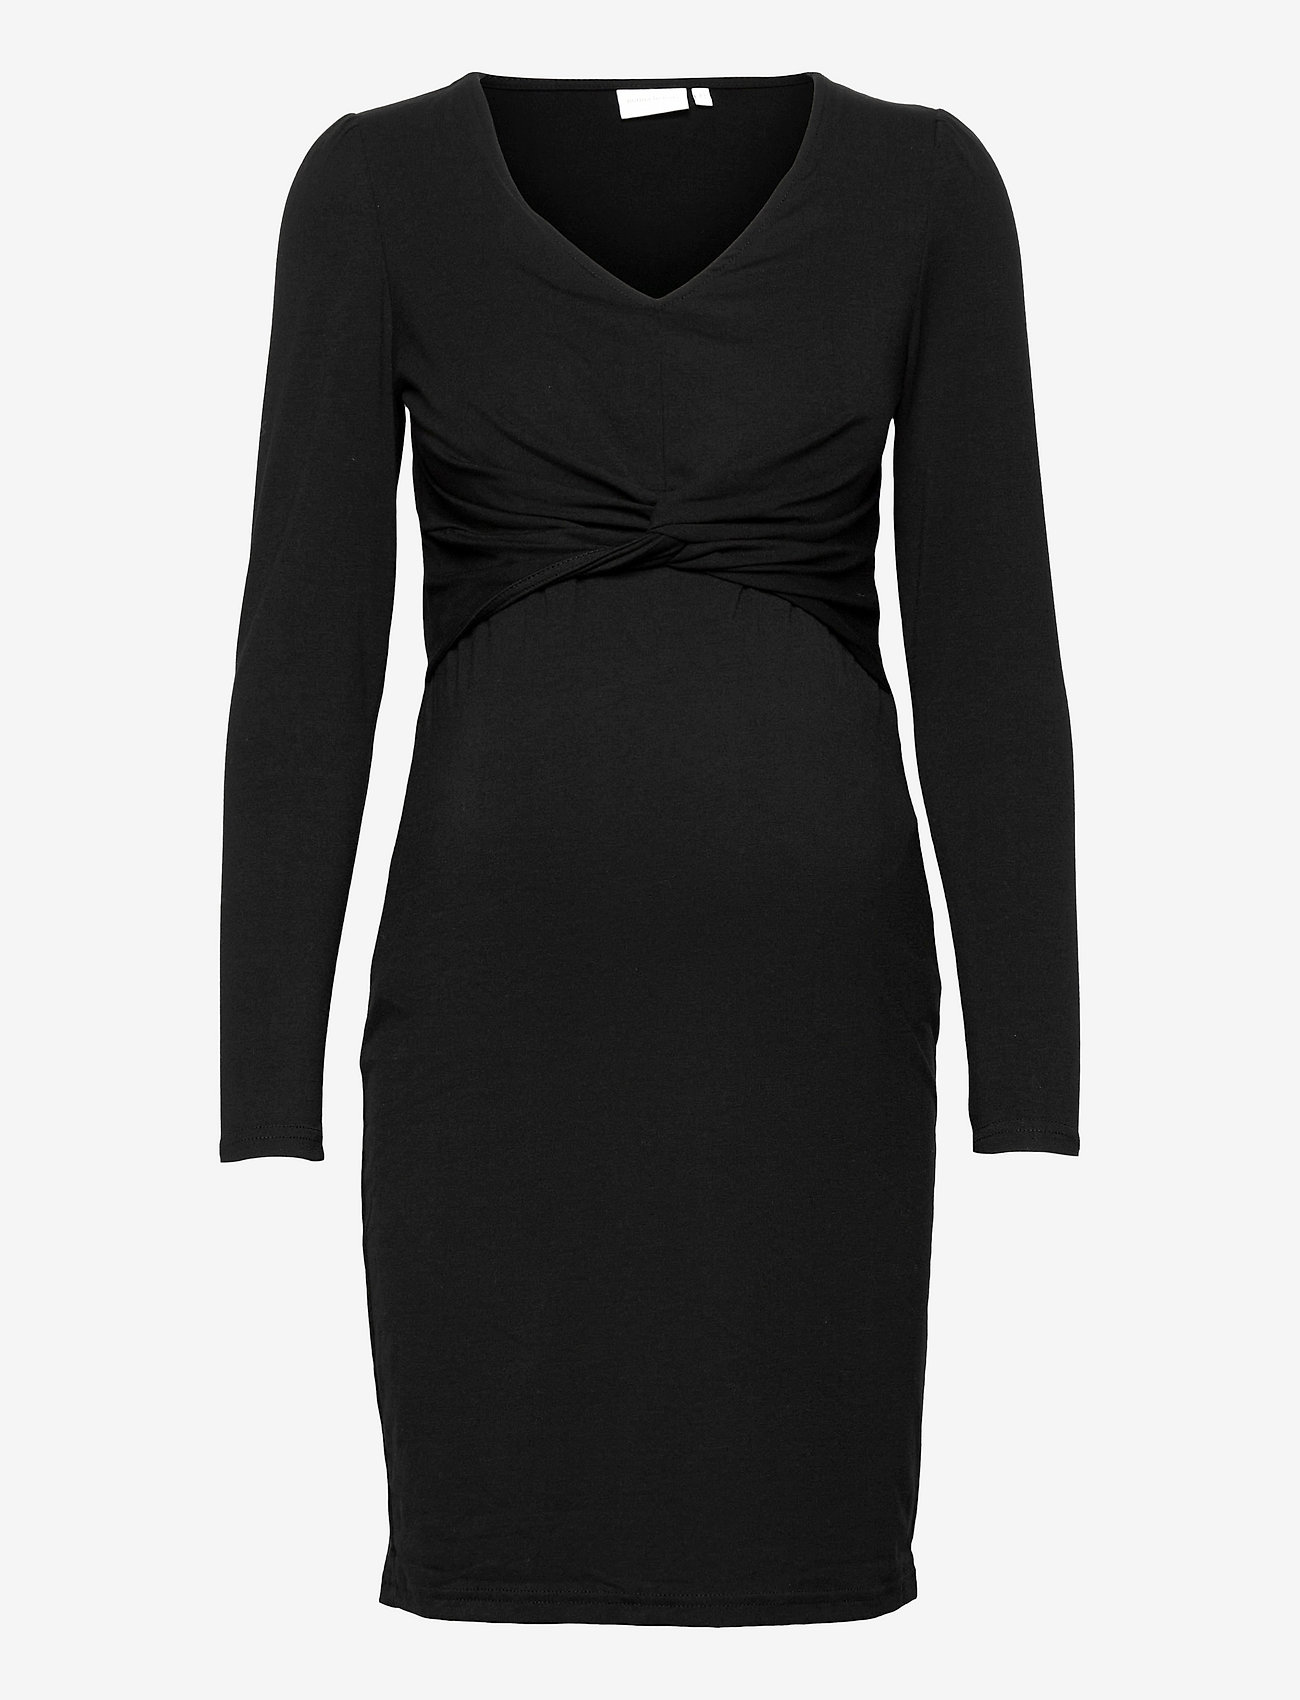 Mamalicious - MLMACY L/S JERSEY ABK DRESS 2F - midi dresses - black - 0